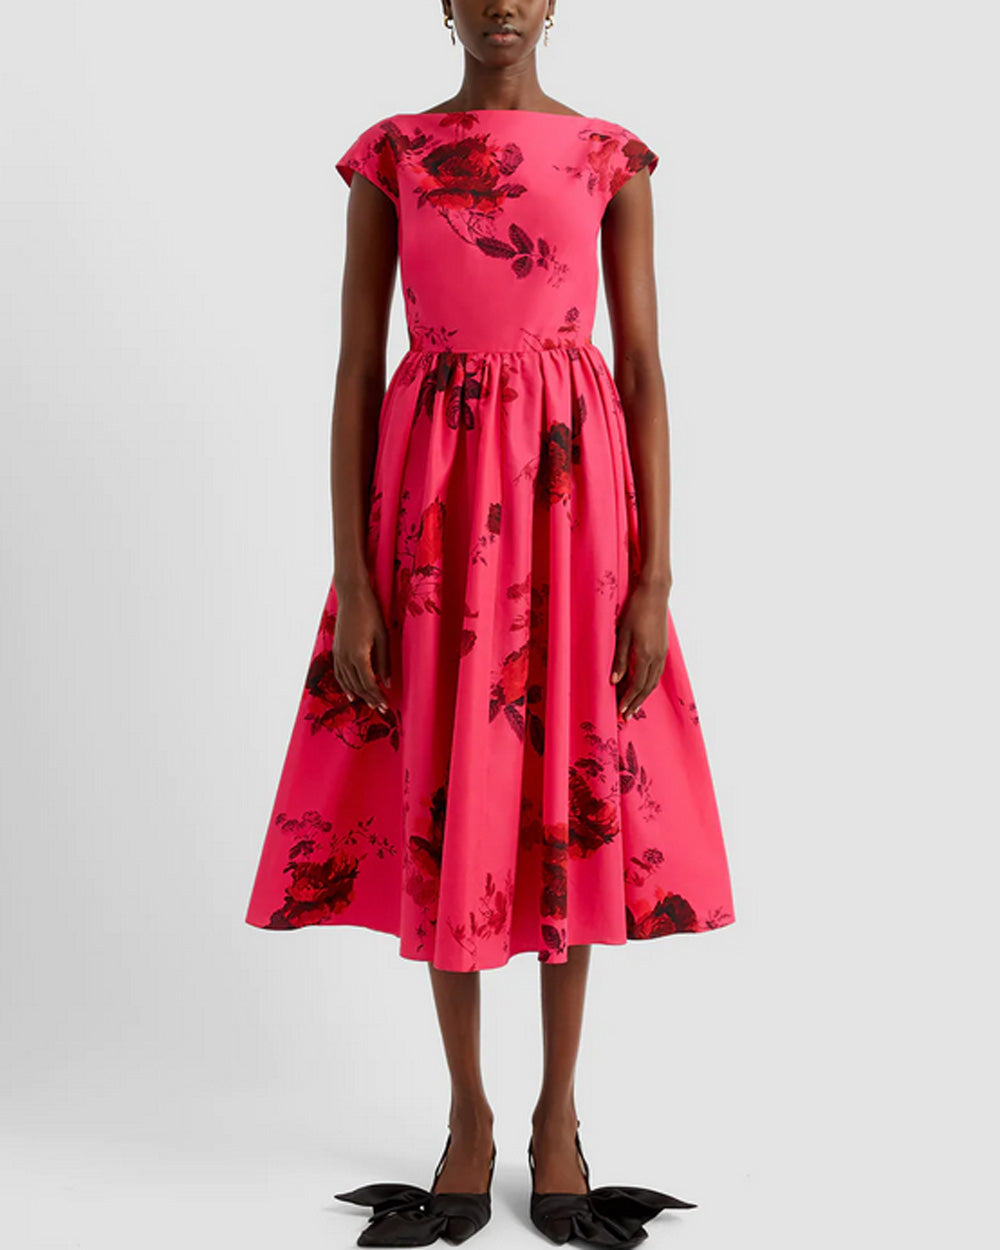 Cerise Floral Print Cap Sleeve Midi Dress